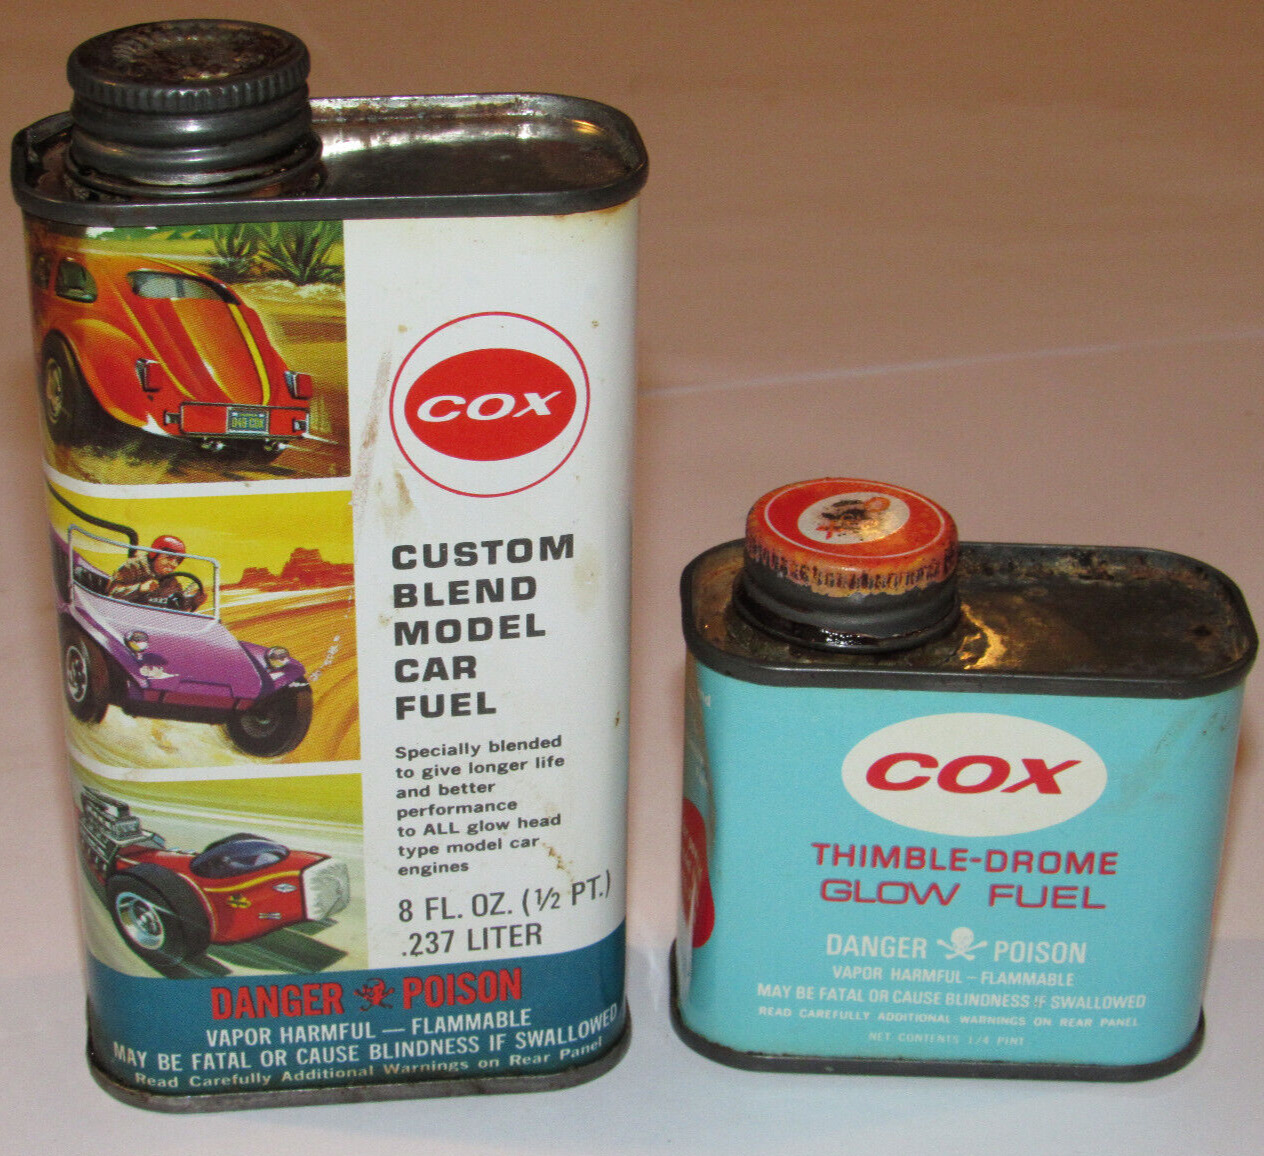 2 VINTAGE 1960s COX METAL FUEL CANS CUSTOM BLEND MODEL CAR/THIMBLE-DROME GLOW